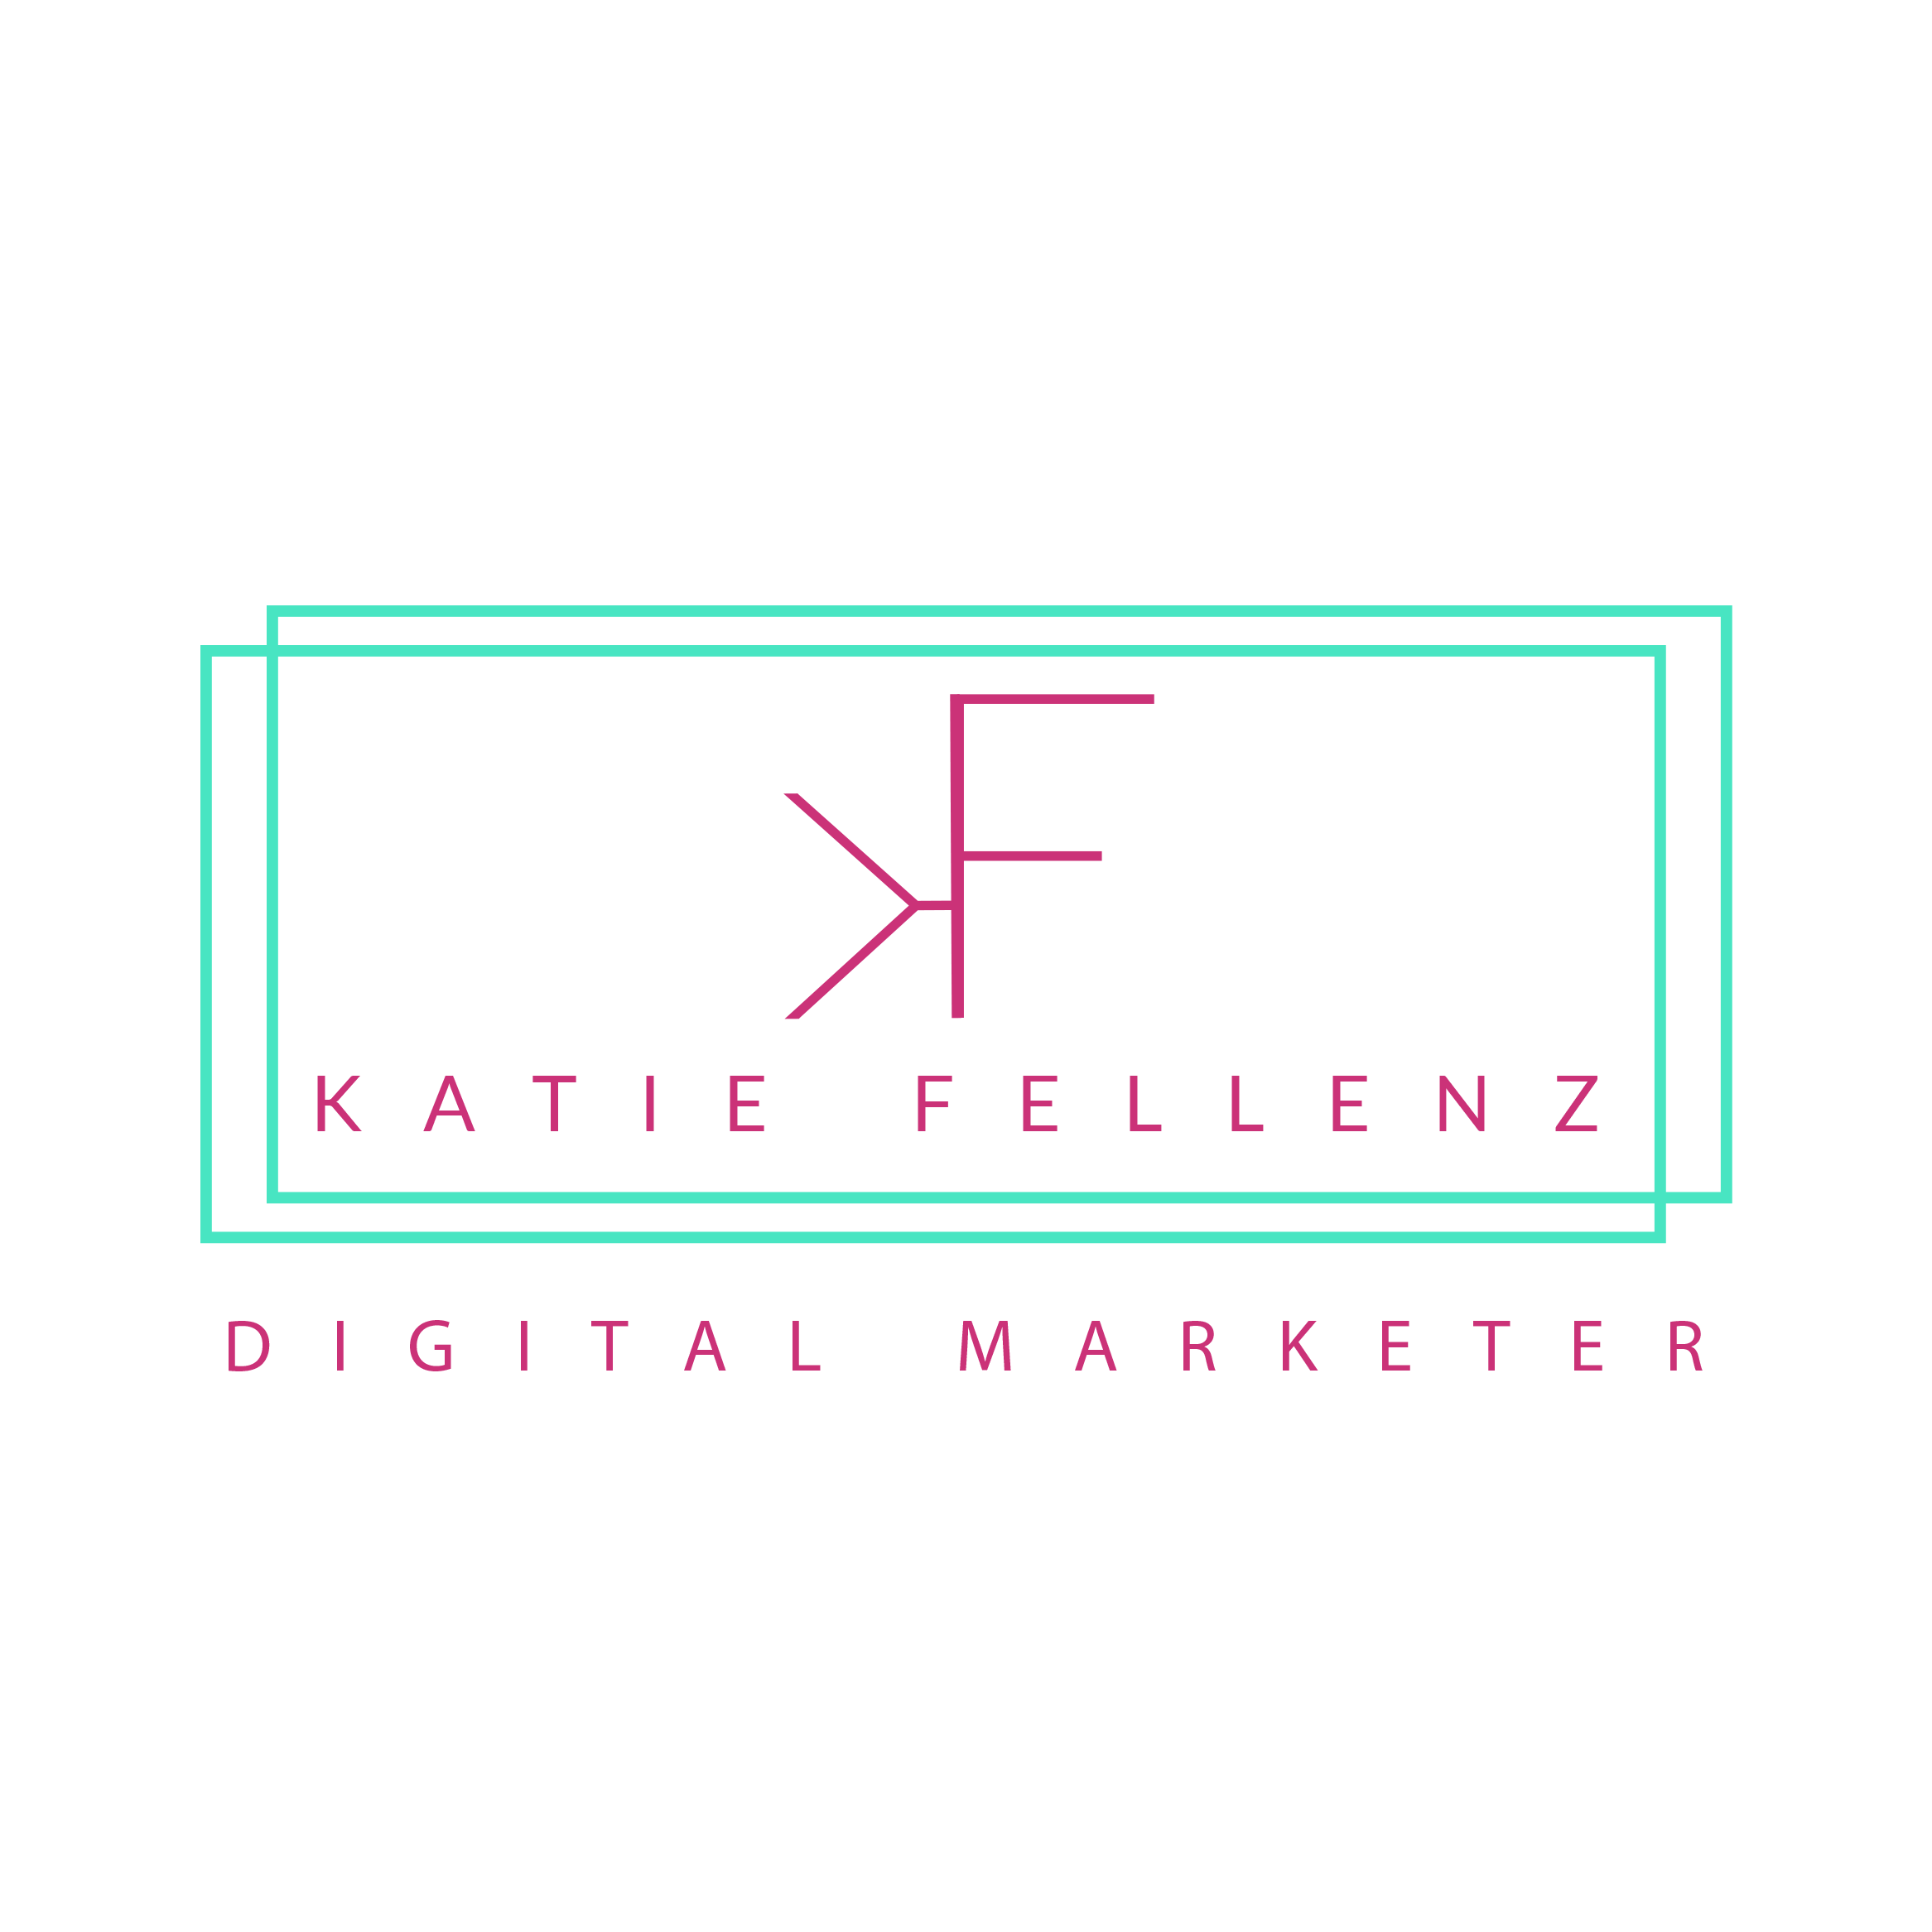 Katie Fellenz Digital Marketer profile on Qualified.One